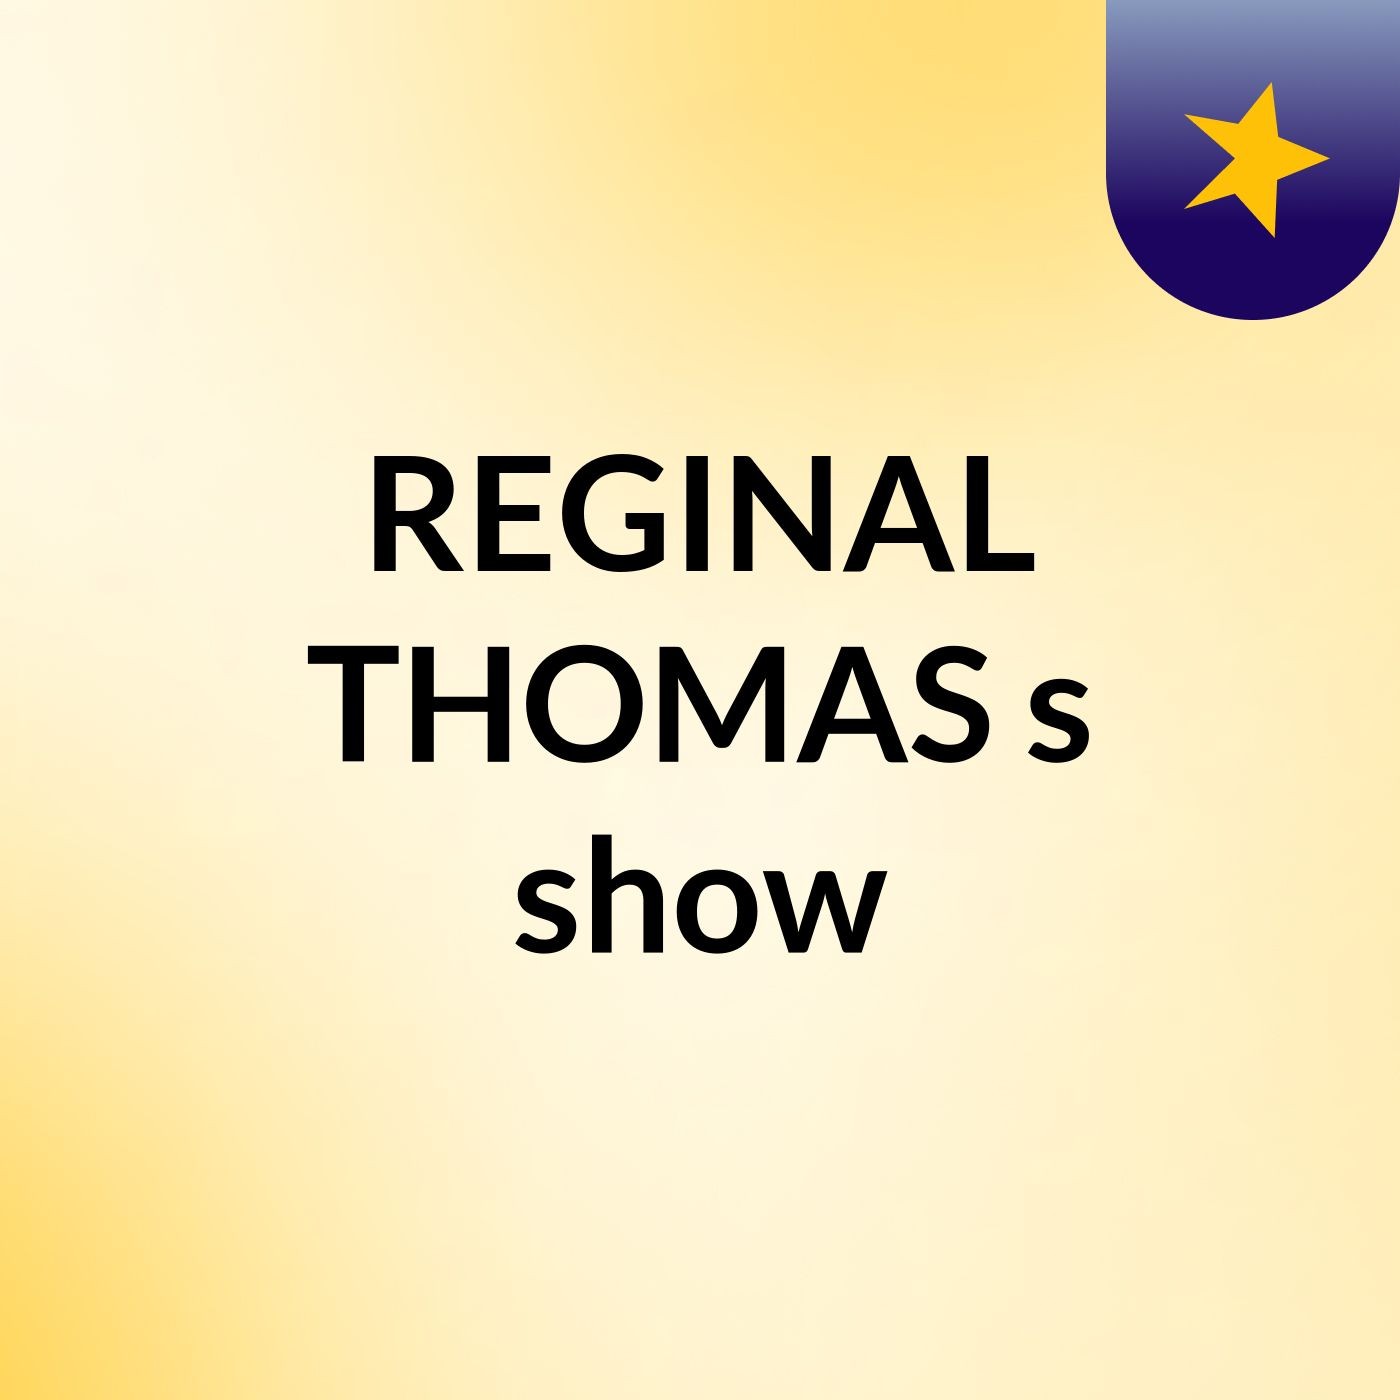 Episode 3 - REGINAL THOMAS's show